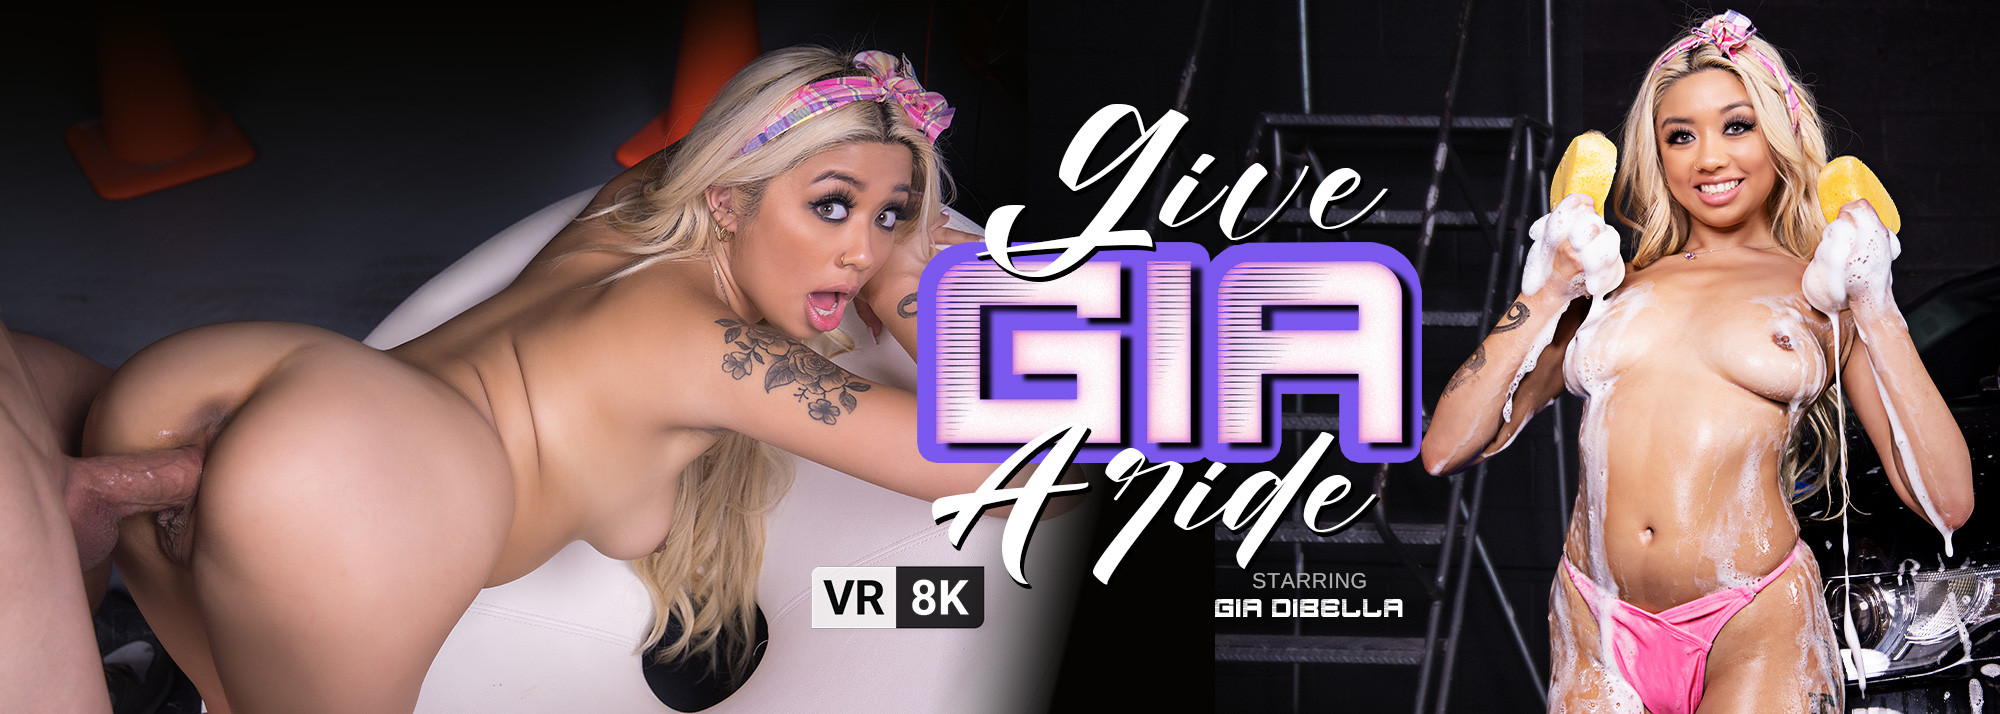 Give Gia A Ride with Gia DiBella  Slideshow